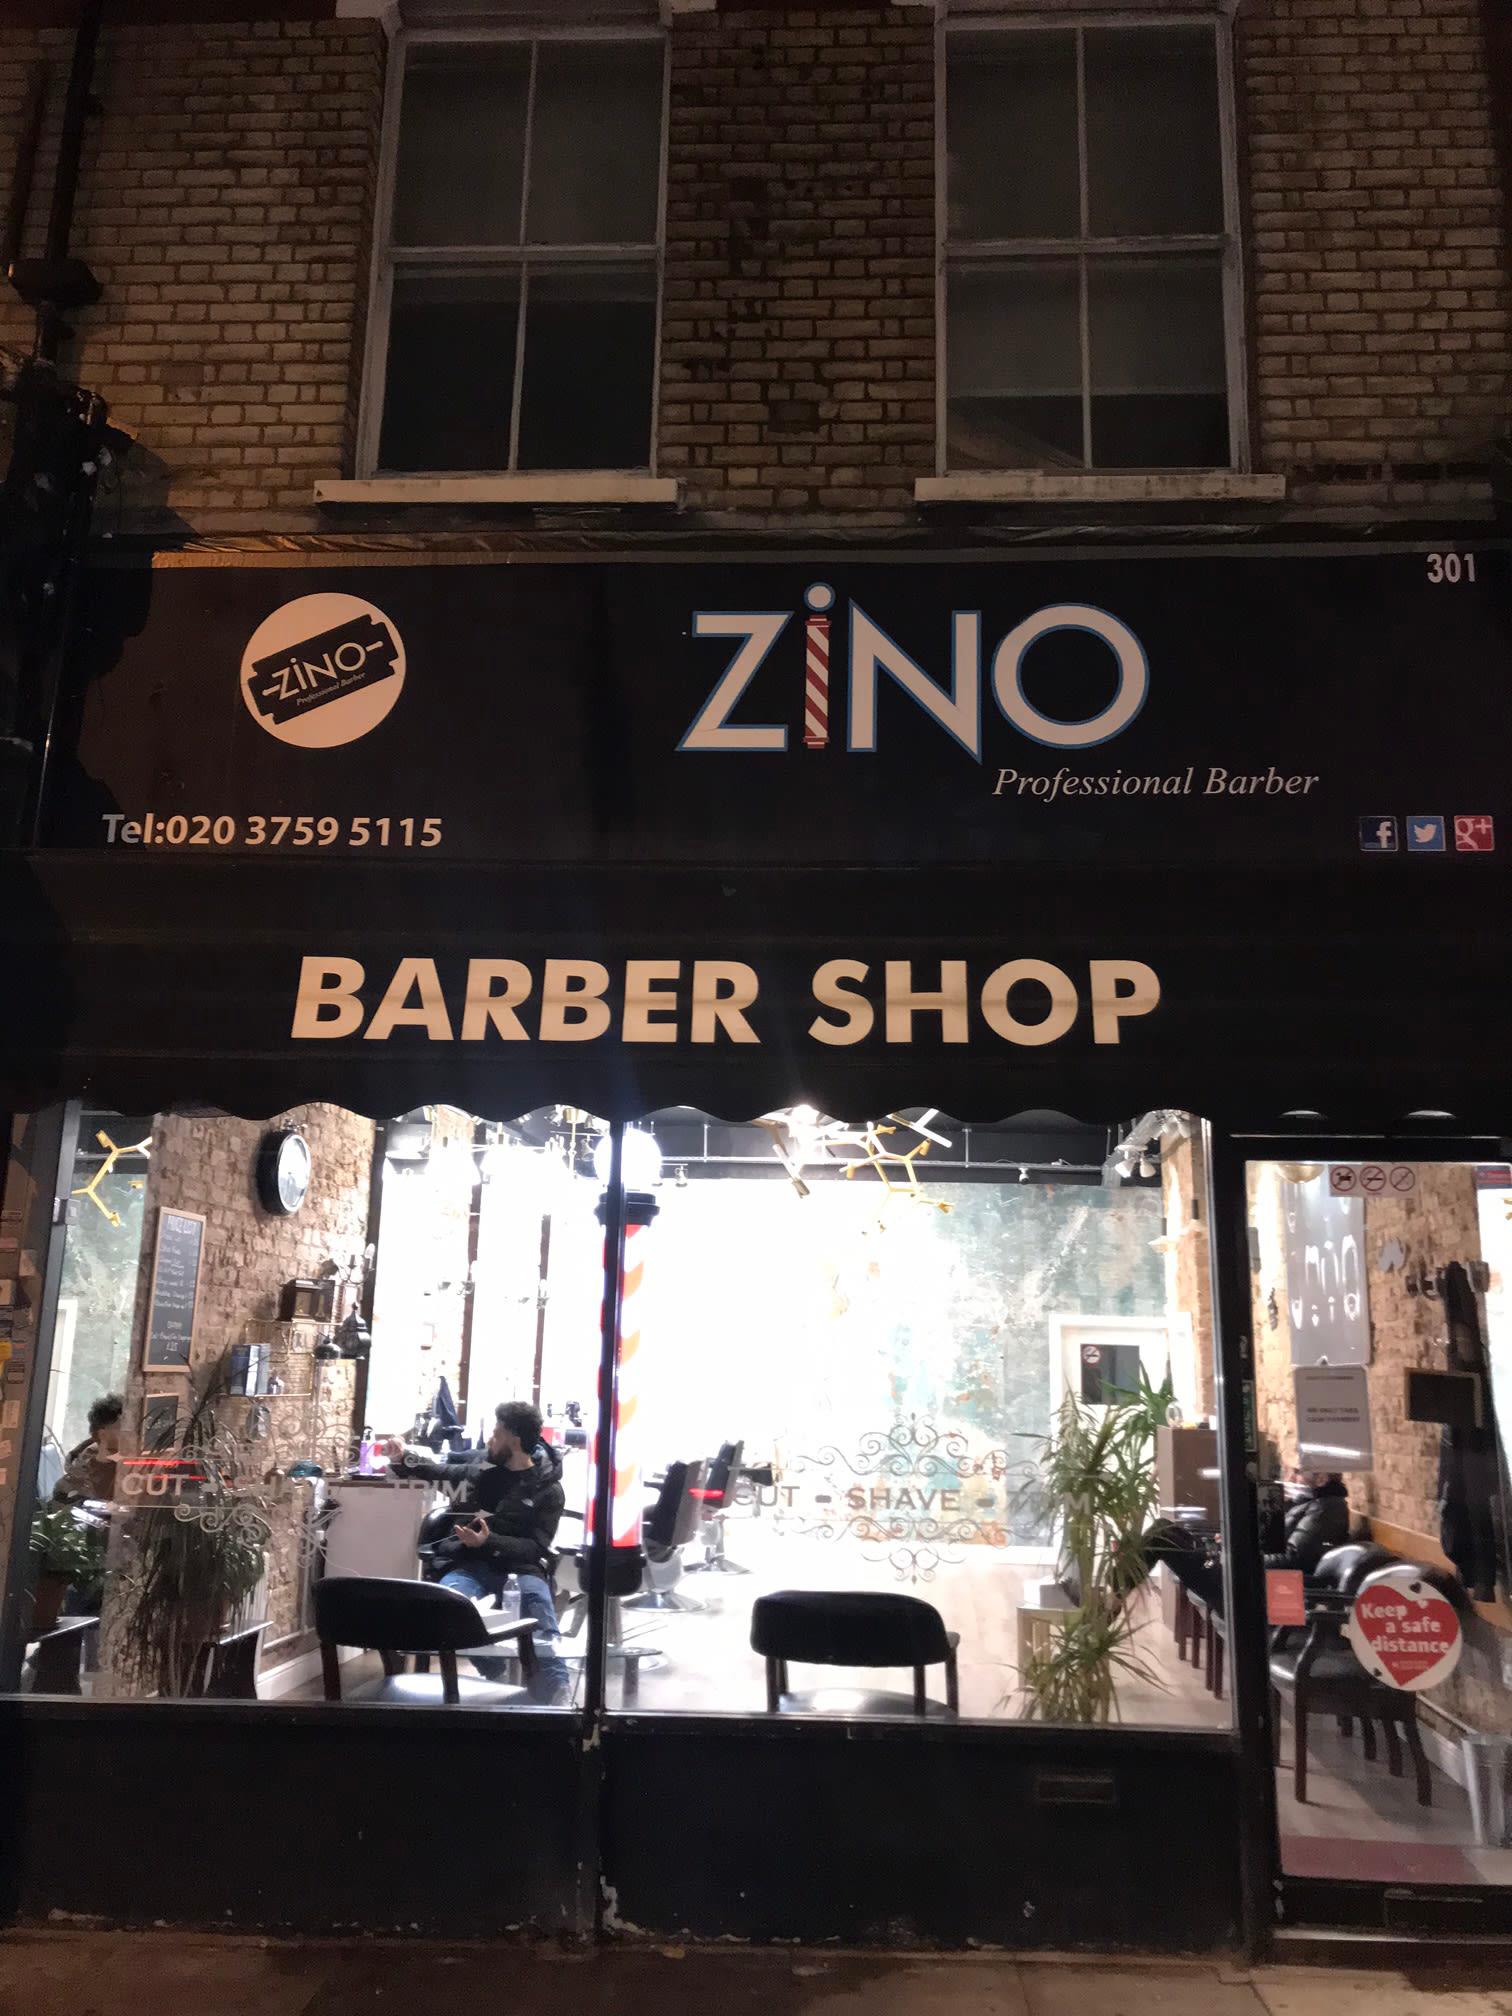 Zinos Professional Barbers London 07724 975067